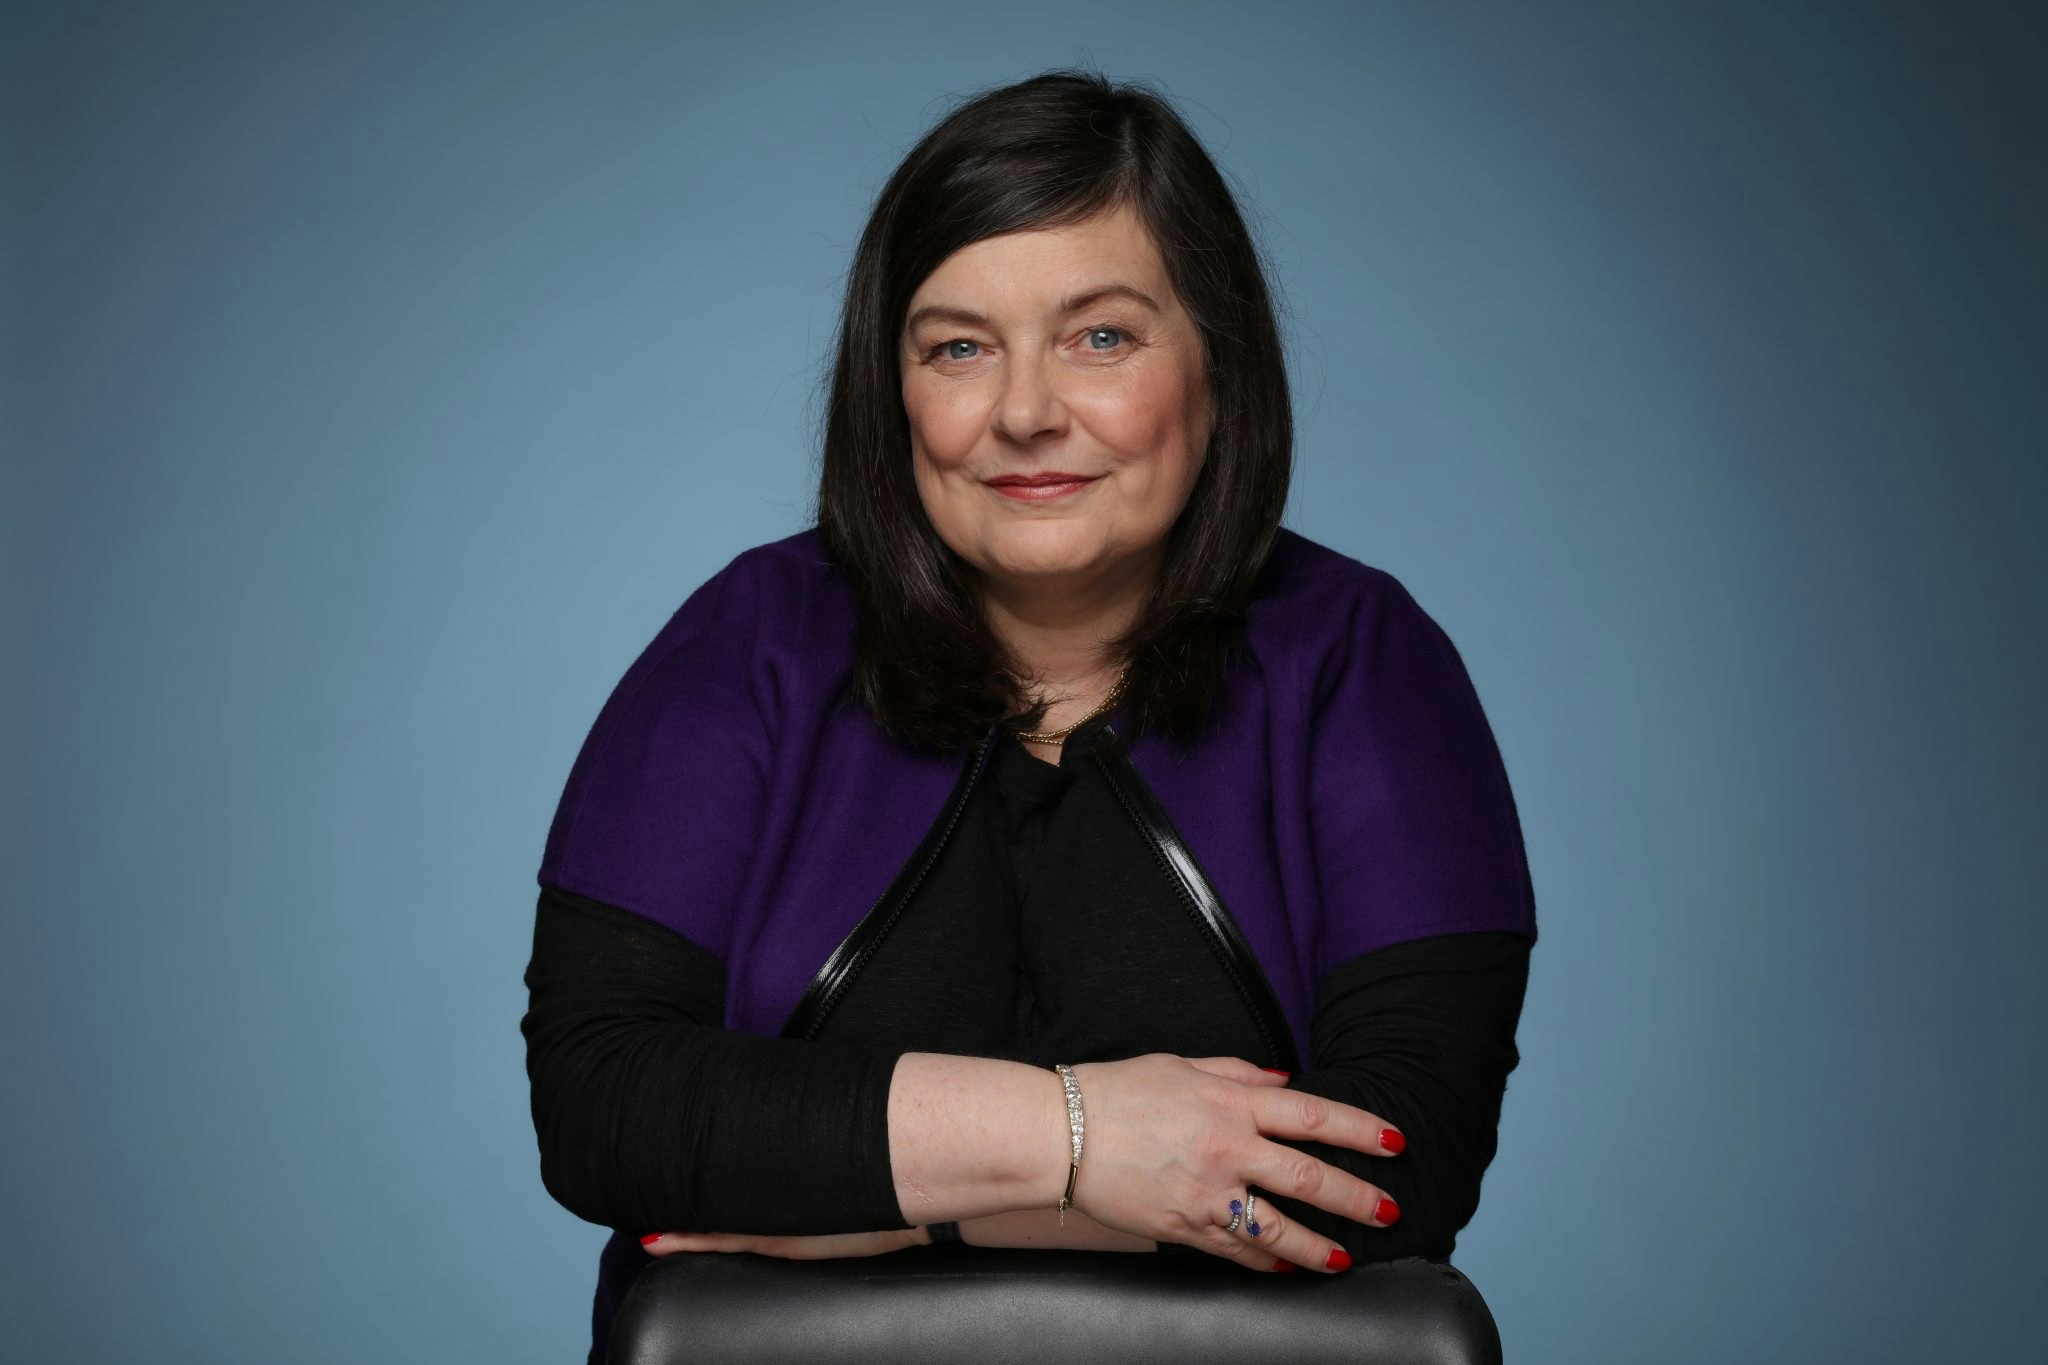 Portrait of Anne Boden, founder of UK online bank Starling